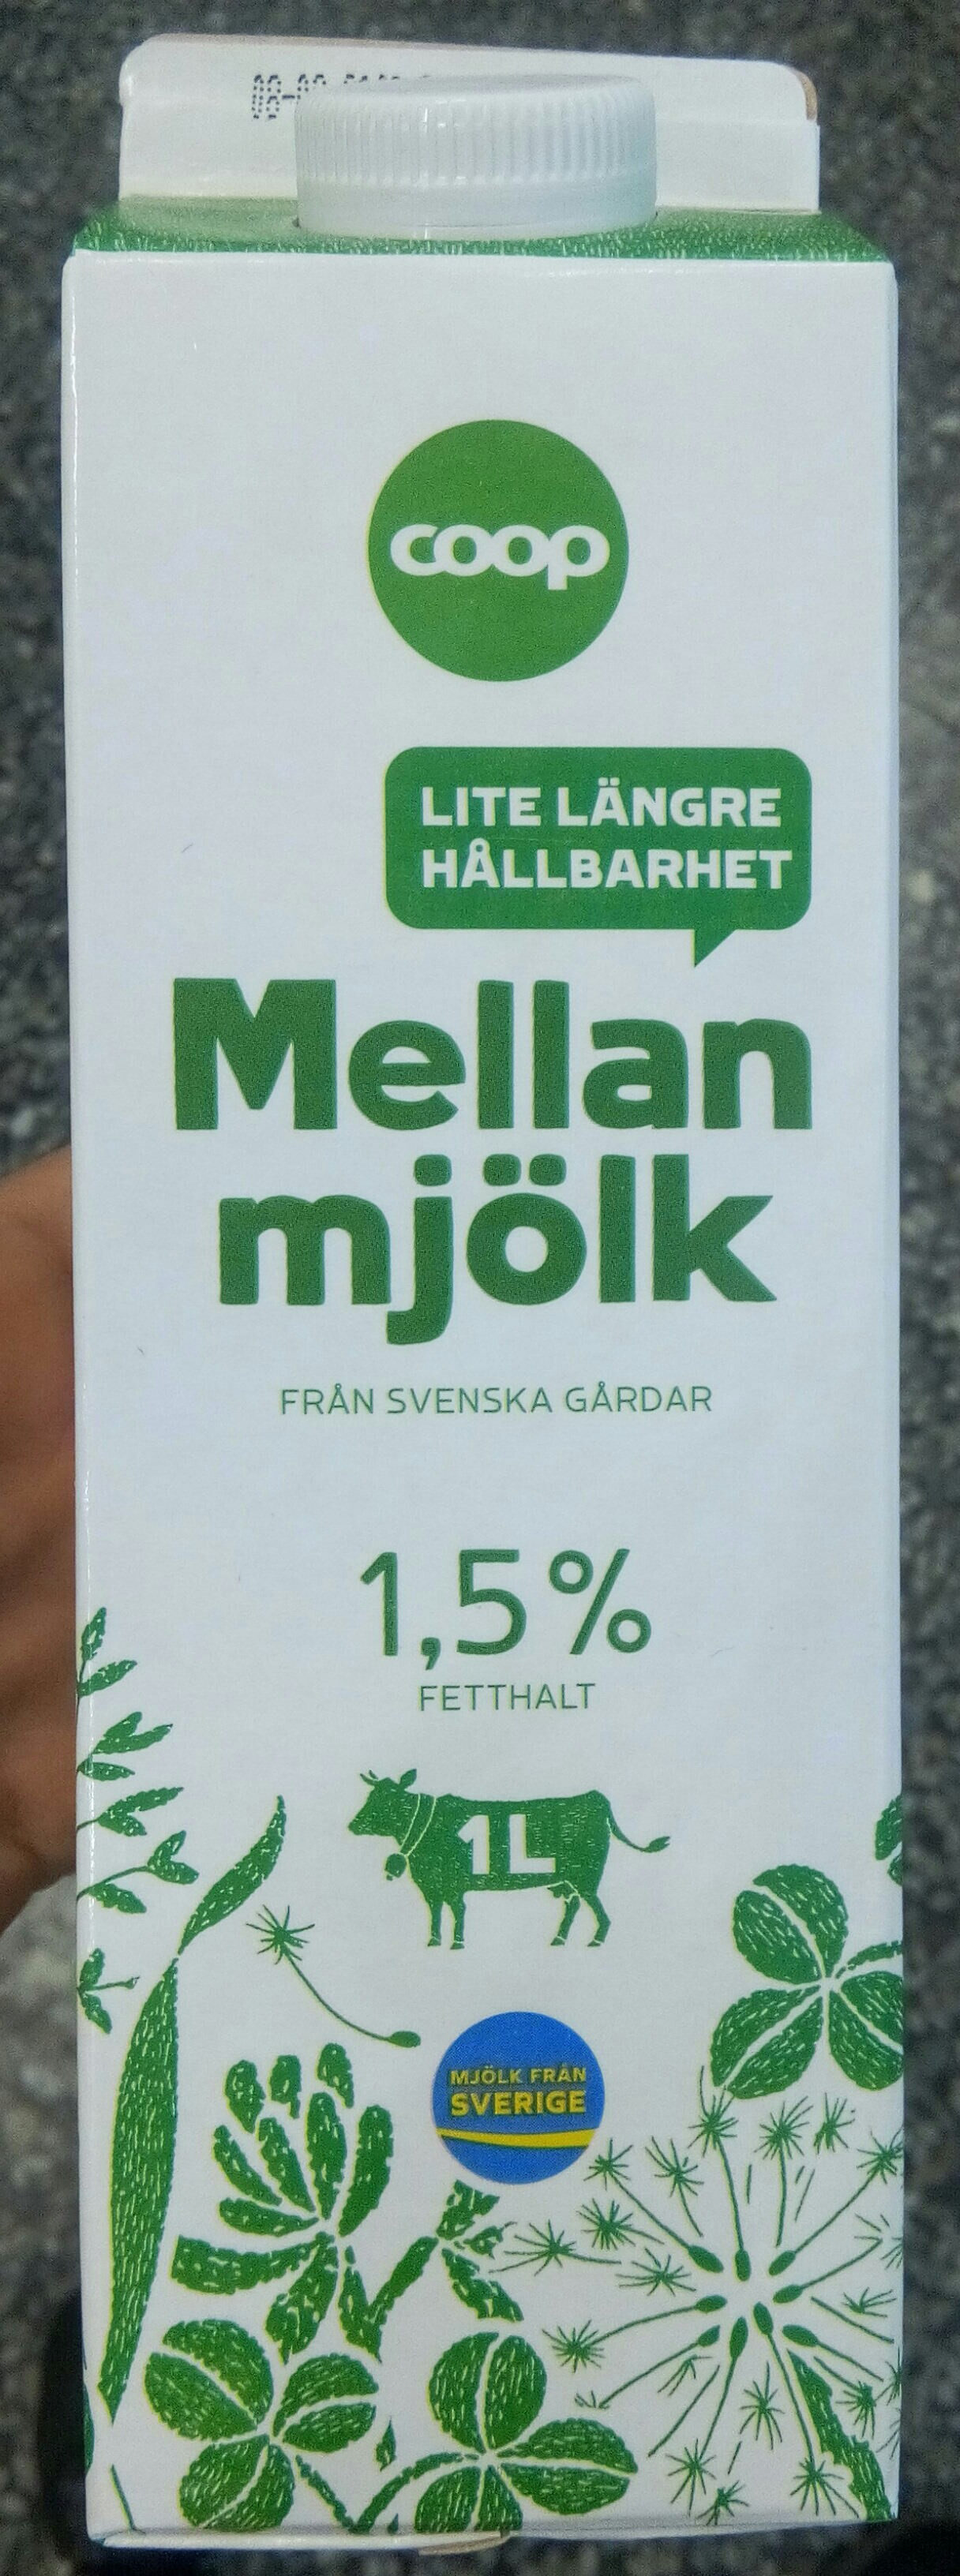 Mellanmjölk 1,5% fetthalt med lite längre hållbarhet. - Produkt - sv